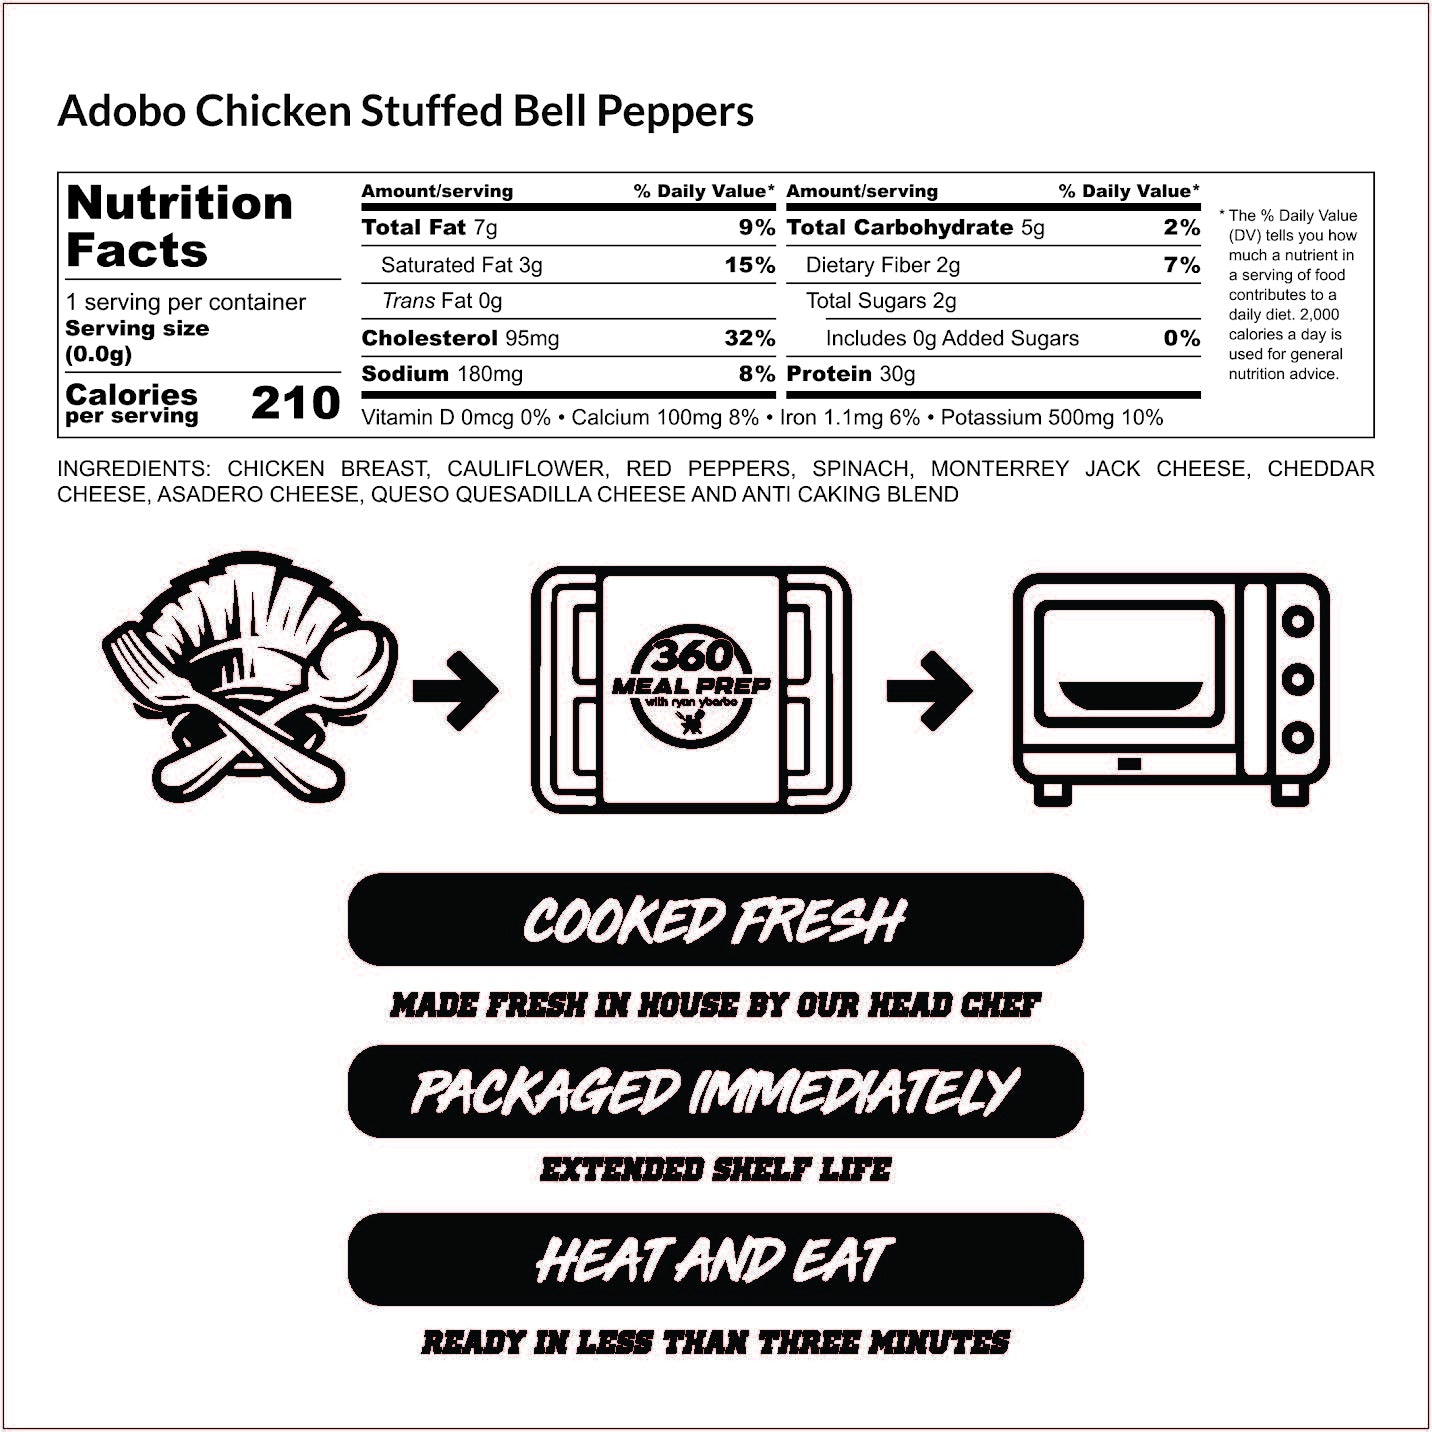 Adobo Chicken Stuffed Bell Peppers